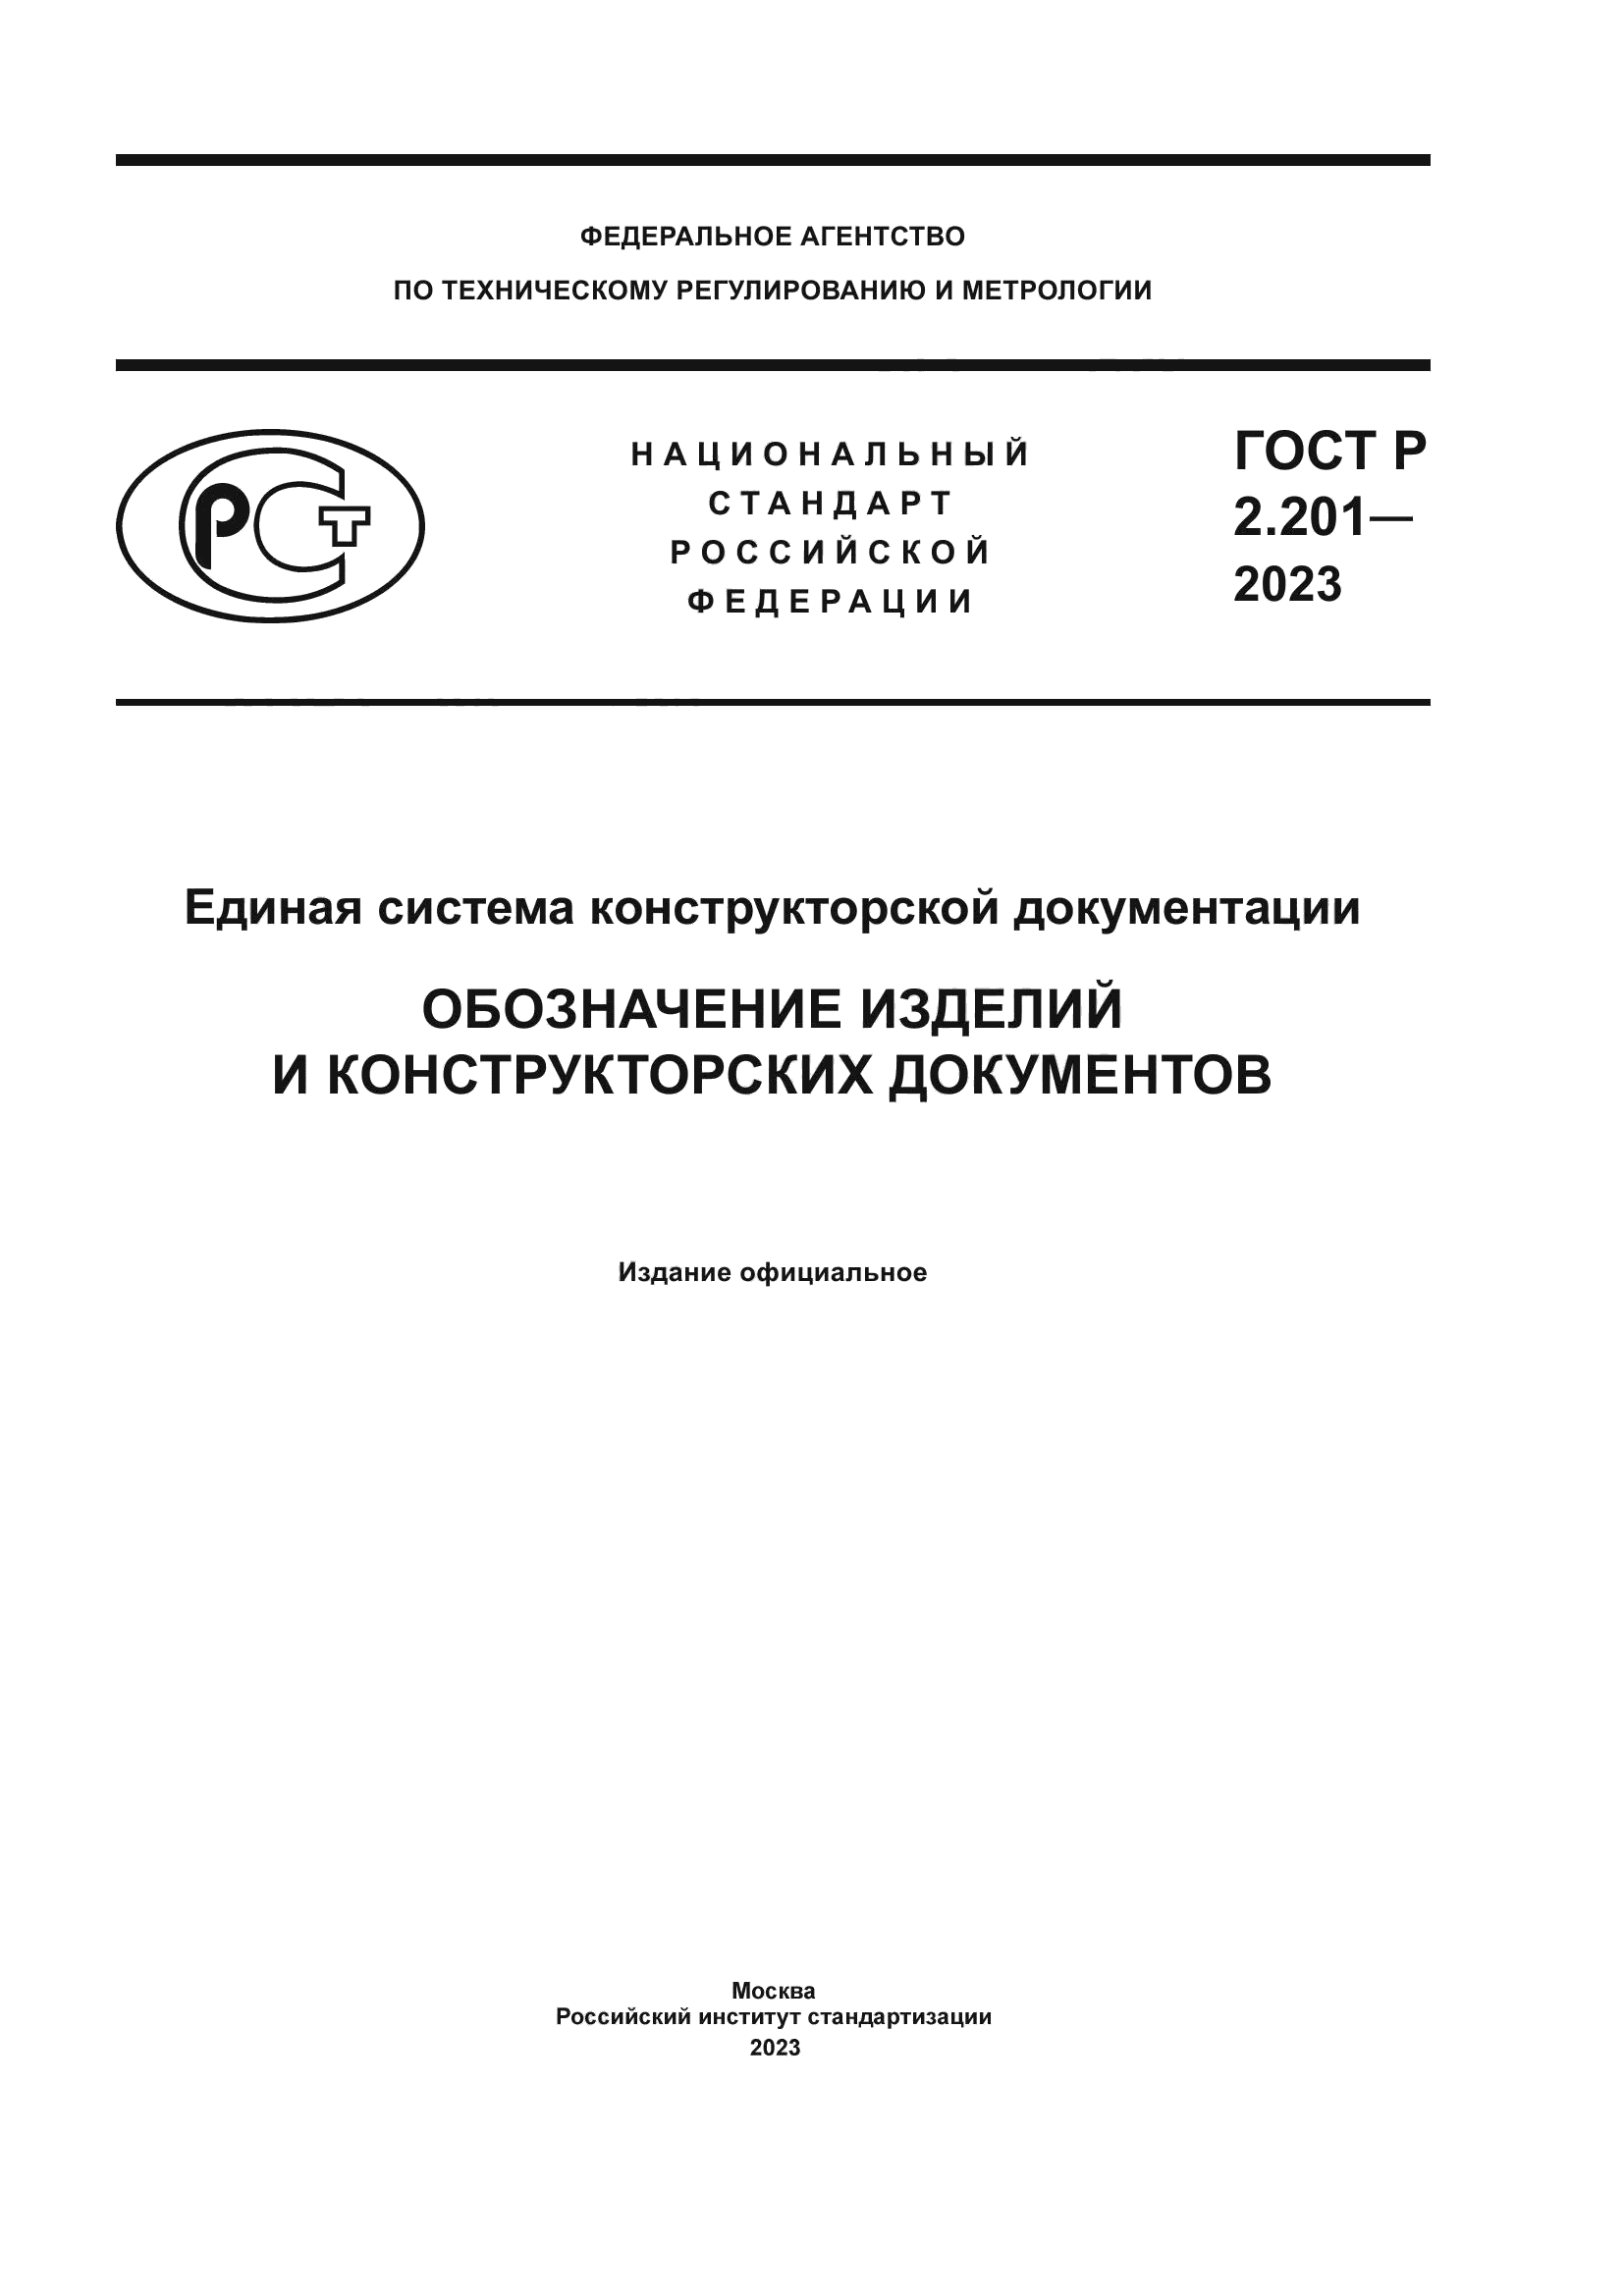 ГОСТ Р 2.201-2023